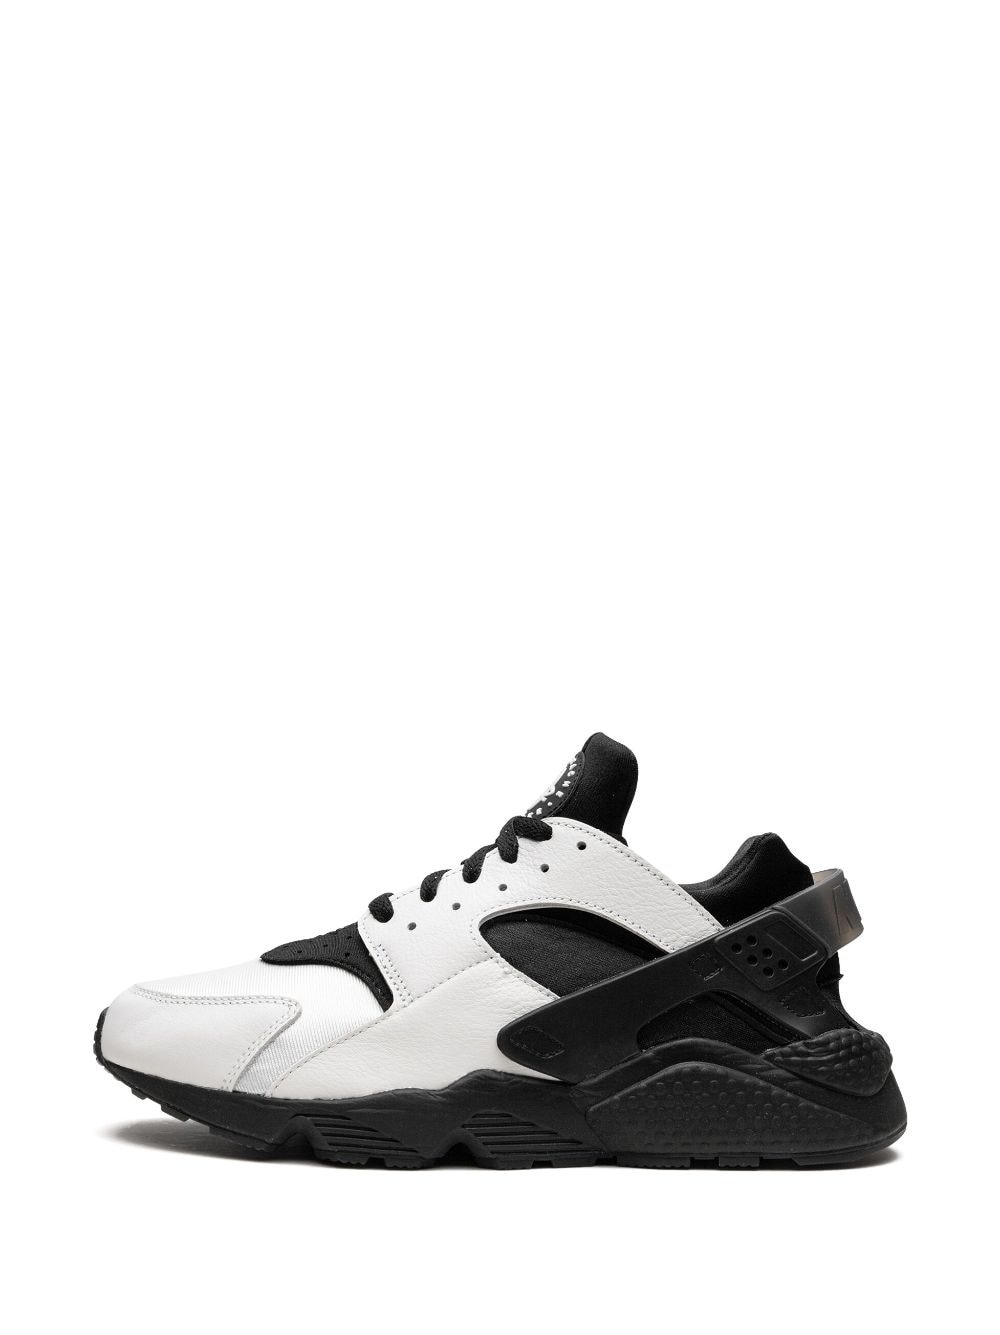 Air Huarache "White/Black" sneakers - 5